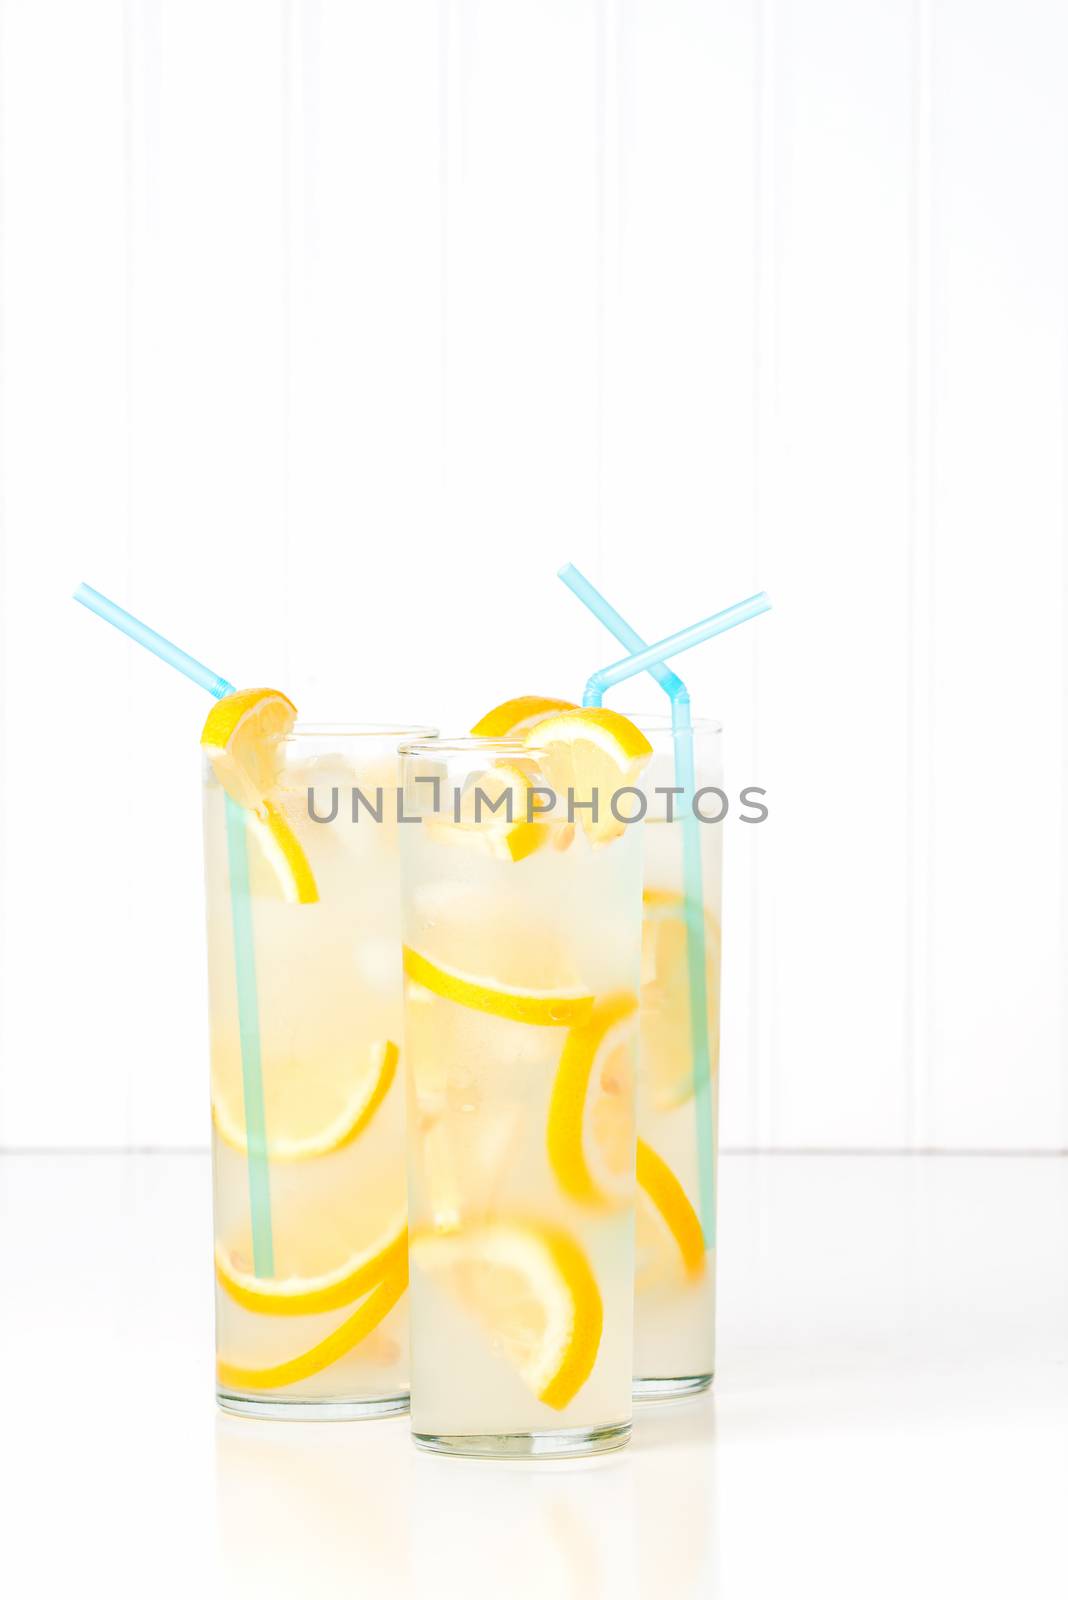 Three tall glasses of ice cold homemade lemonade.